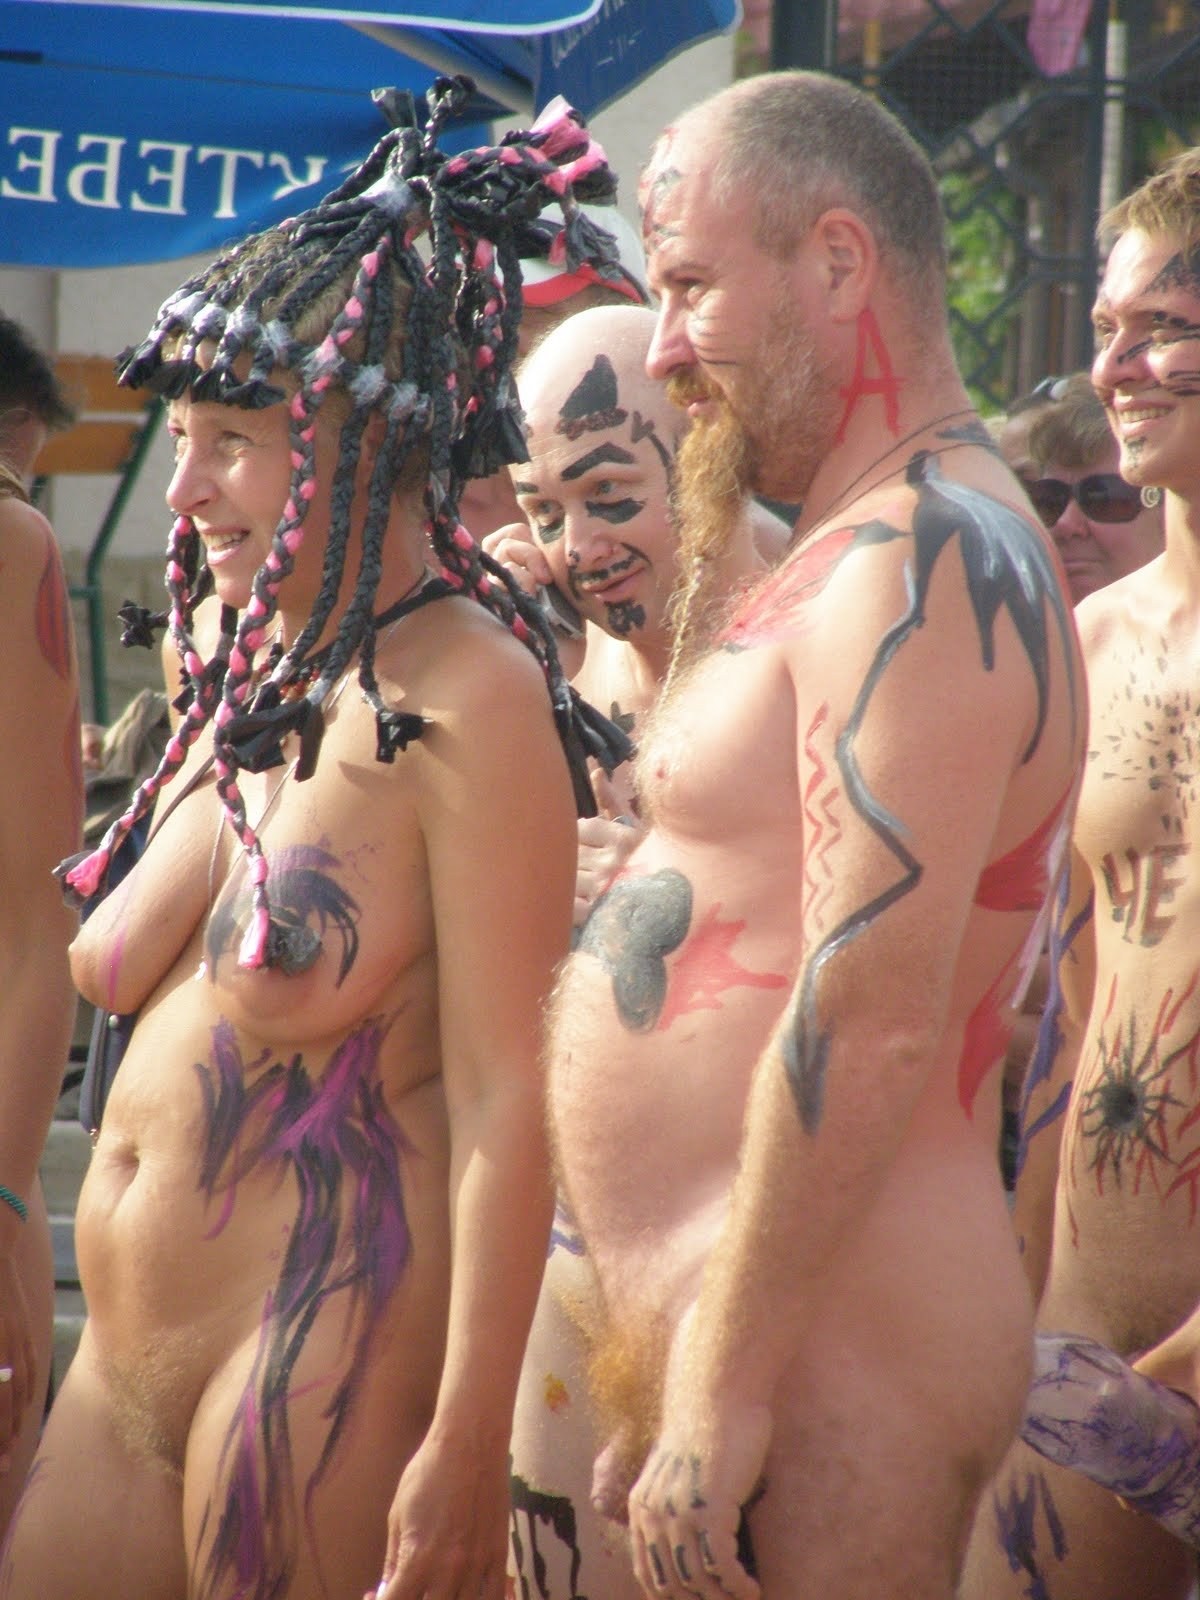 https://motherlesspics.com/uploads/posts/2022-11/1668673360_16-motherlesspics-com-p-erotika-sliv-festival-nudistov-18.jpg